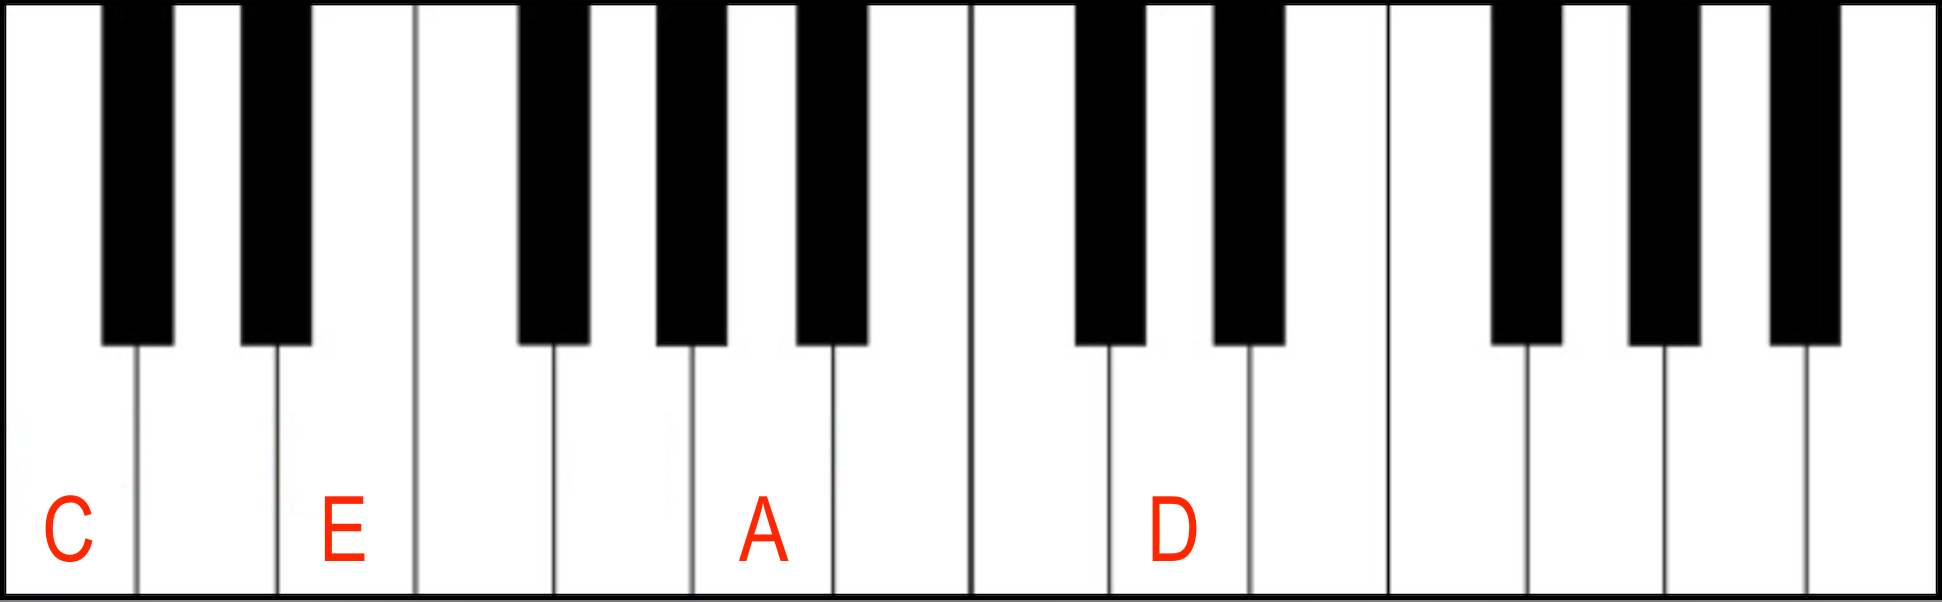 C 6-9 Major 6/9 Jazz Piano Chord